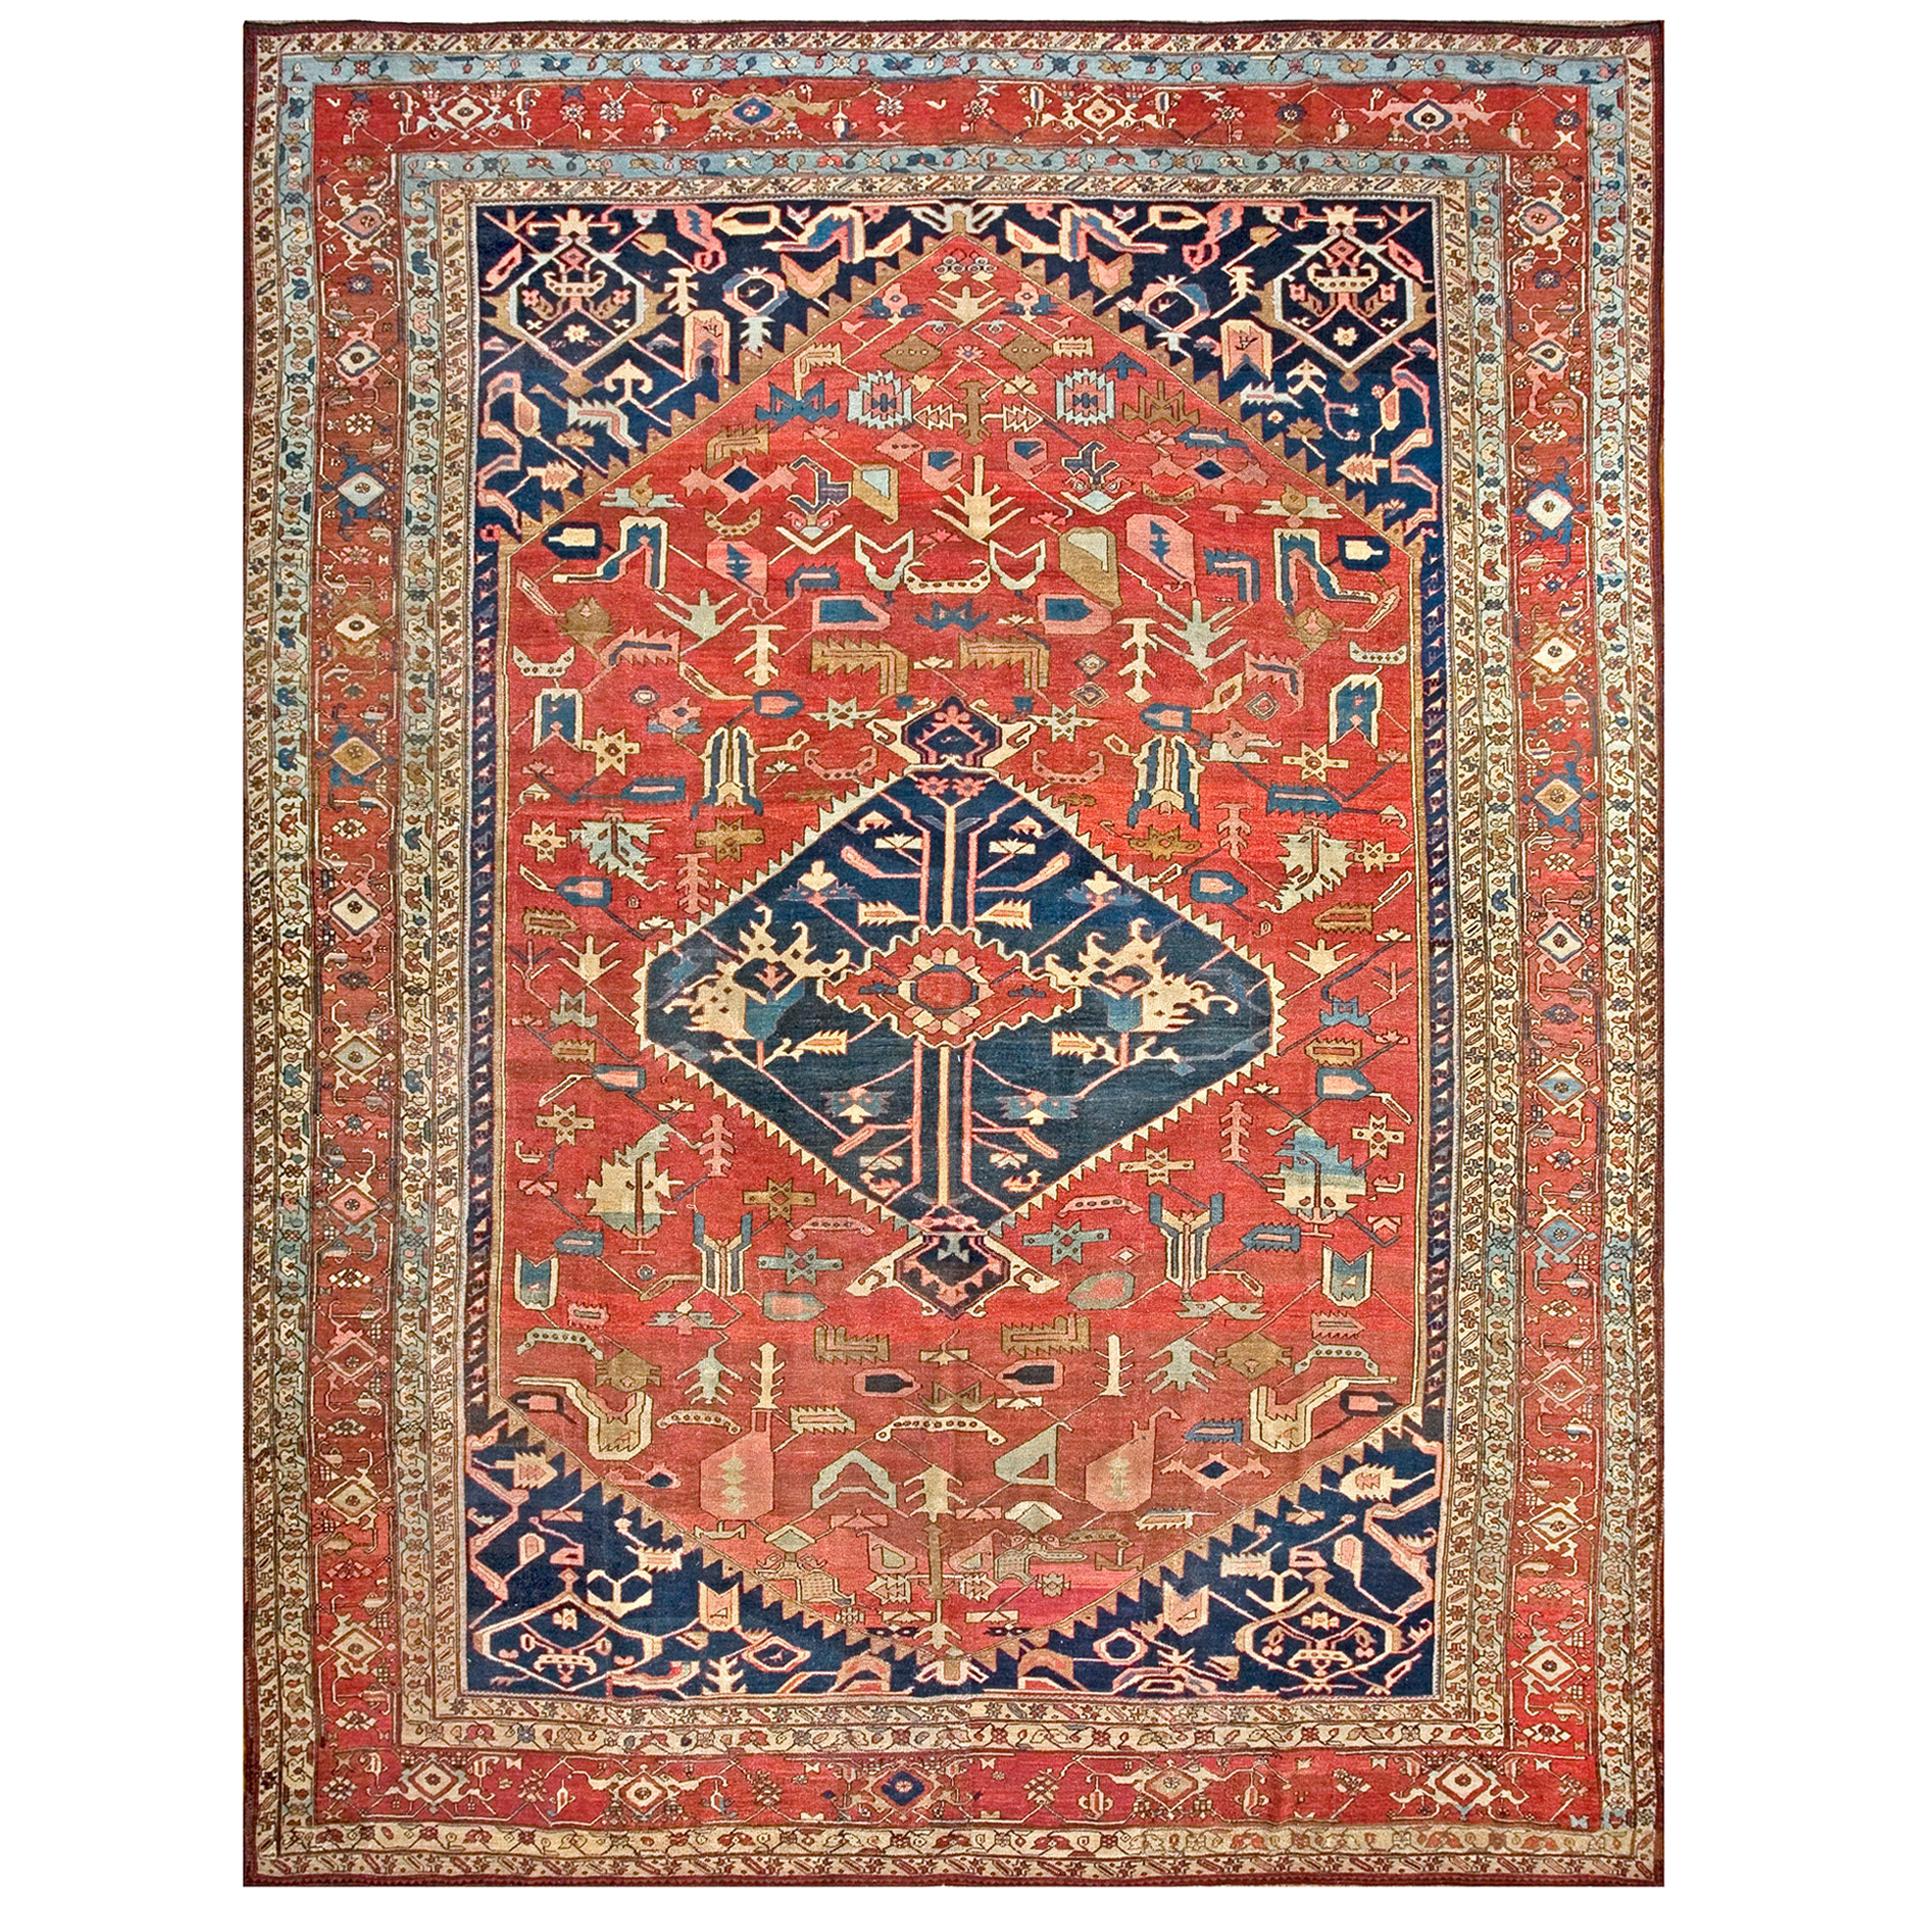 Late 19th Century N.W. Persian Serapi Carpet ( 11'5" x 14'5" - 350 x 440 )